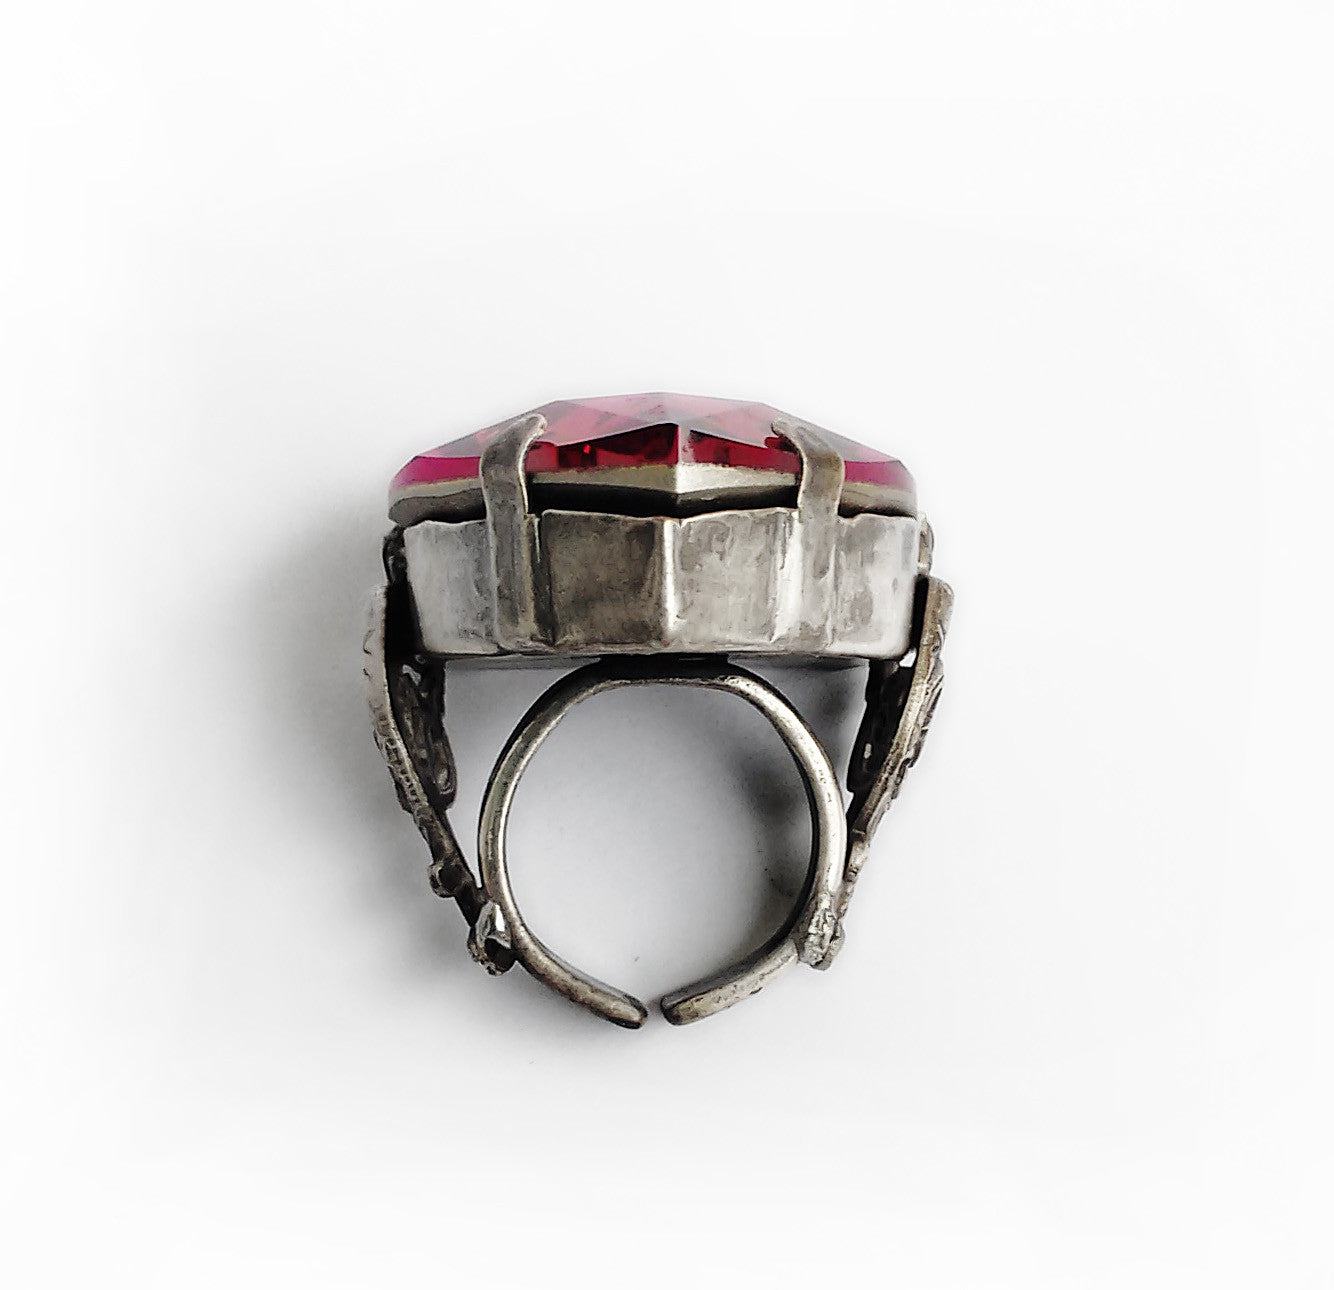 Valkyries Heart Ring - Aranwen's Jewelry
 - 3